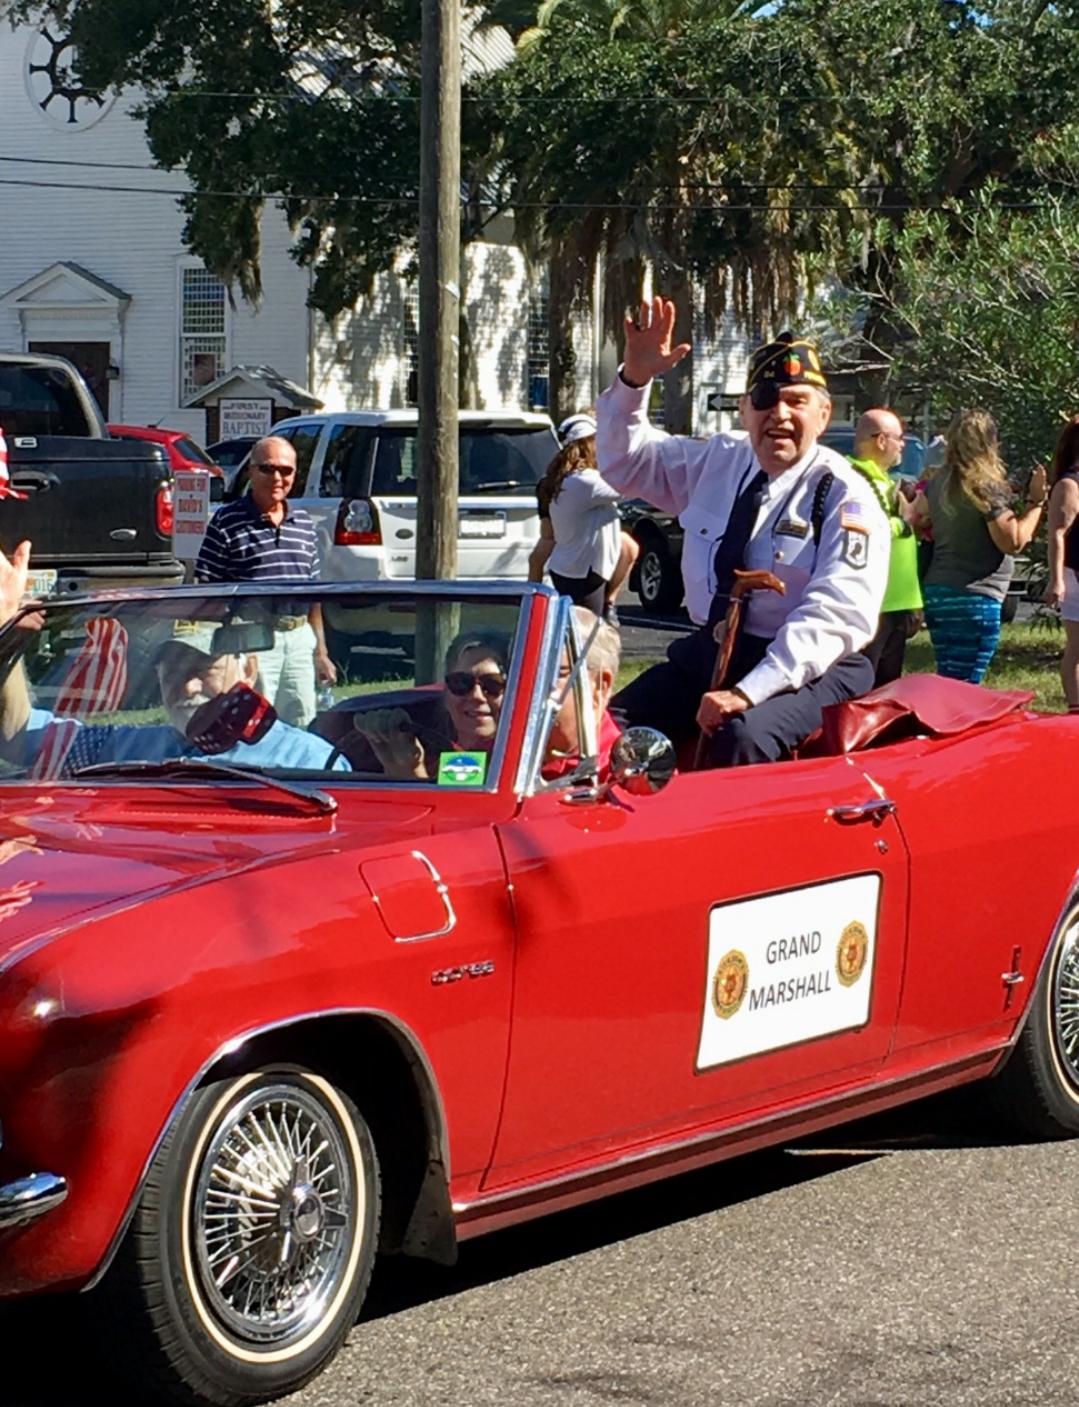 Veterans Day Parade in Fernandina Beach, Florida